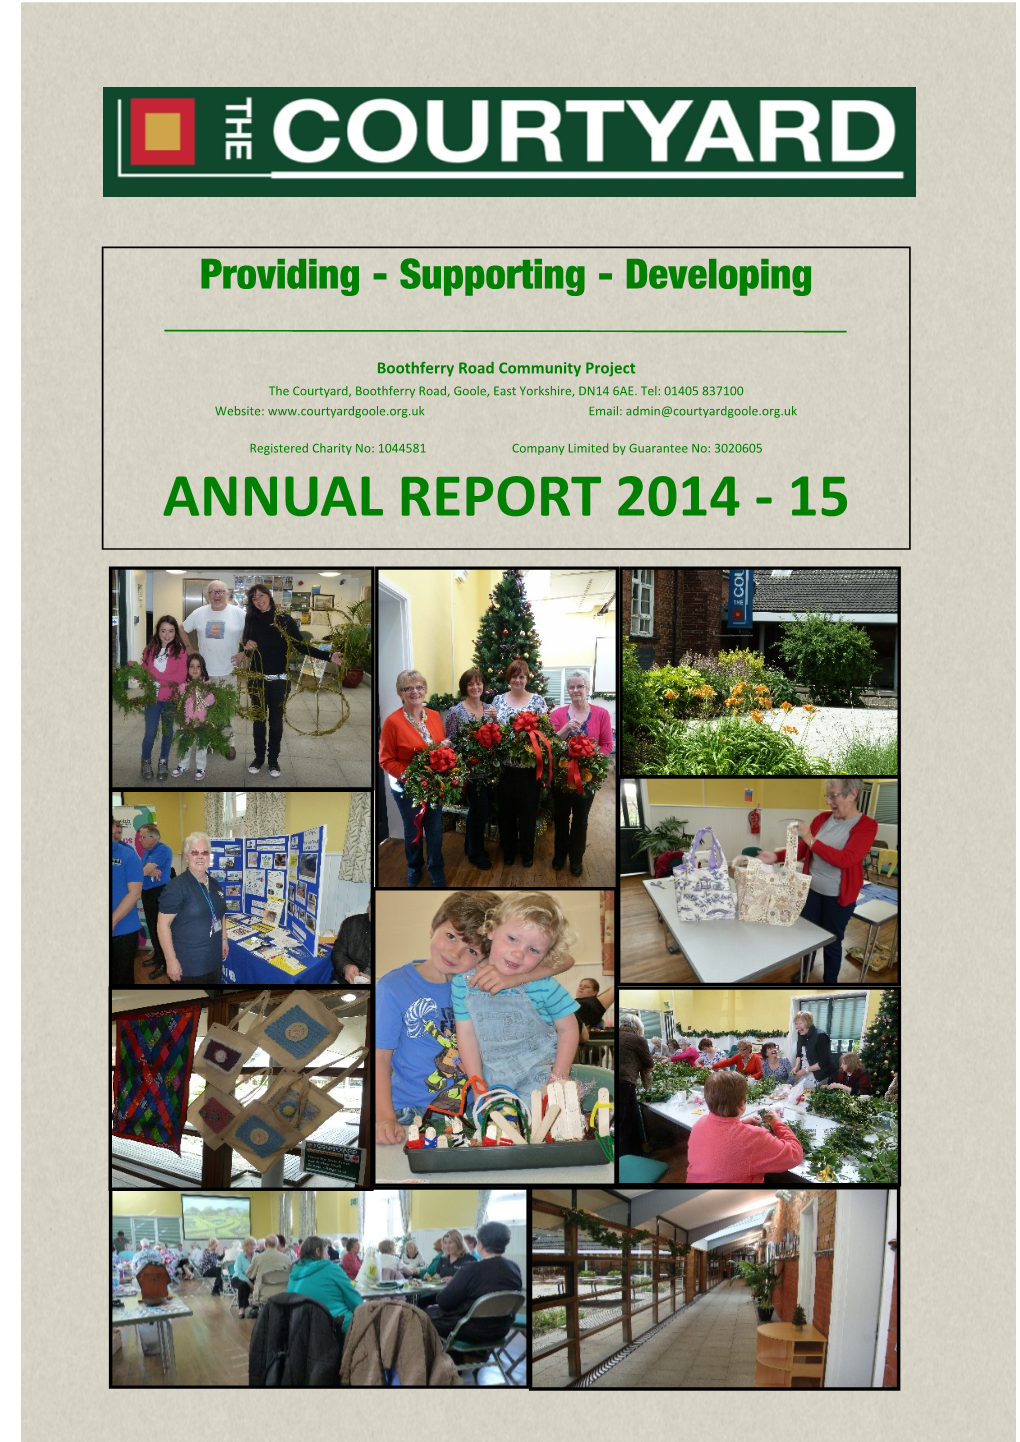 Annual Report 14